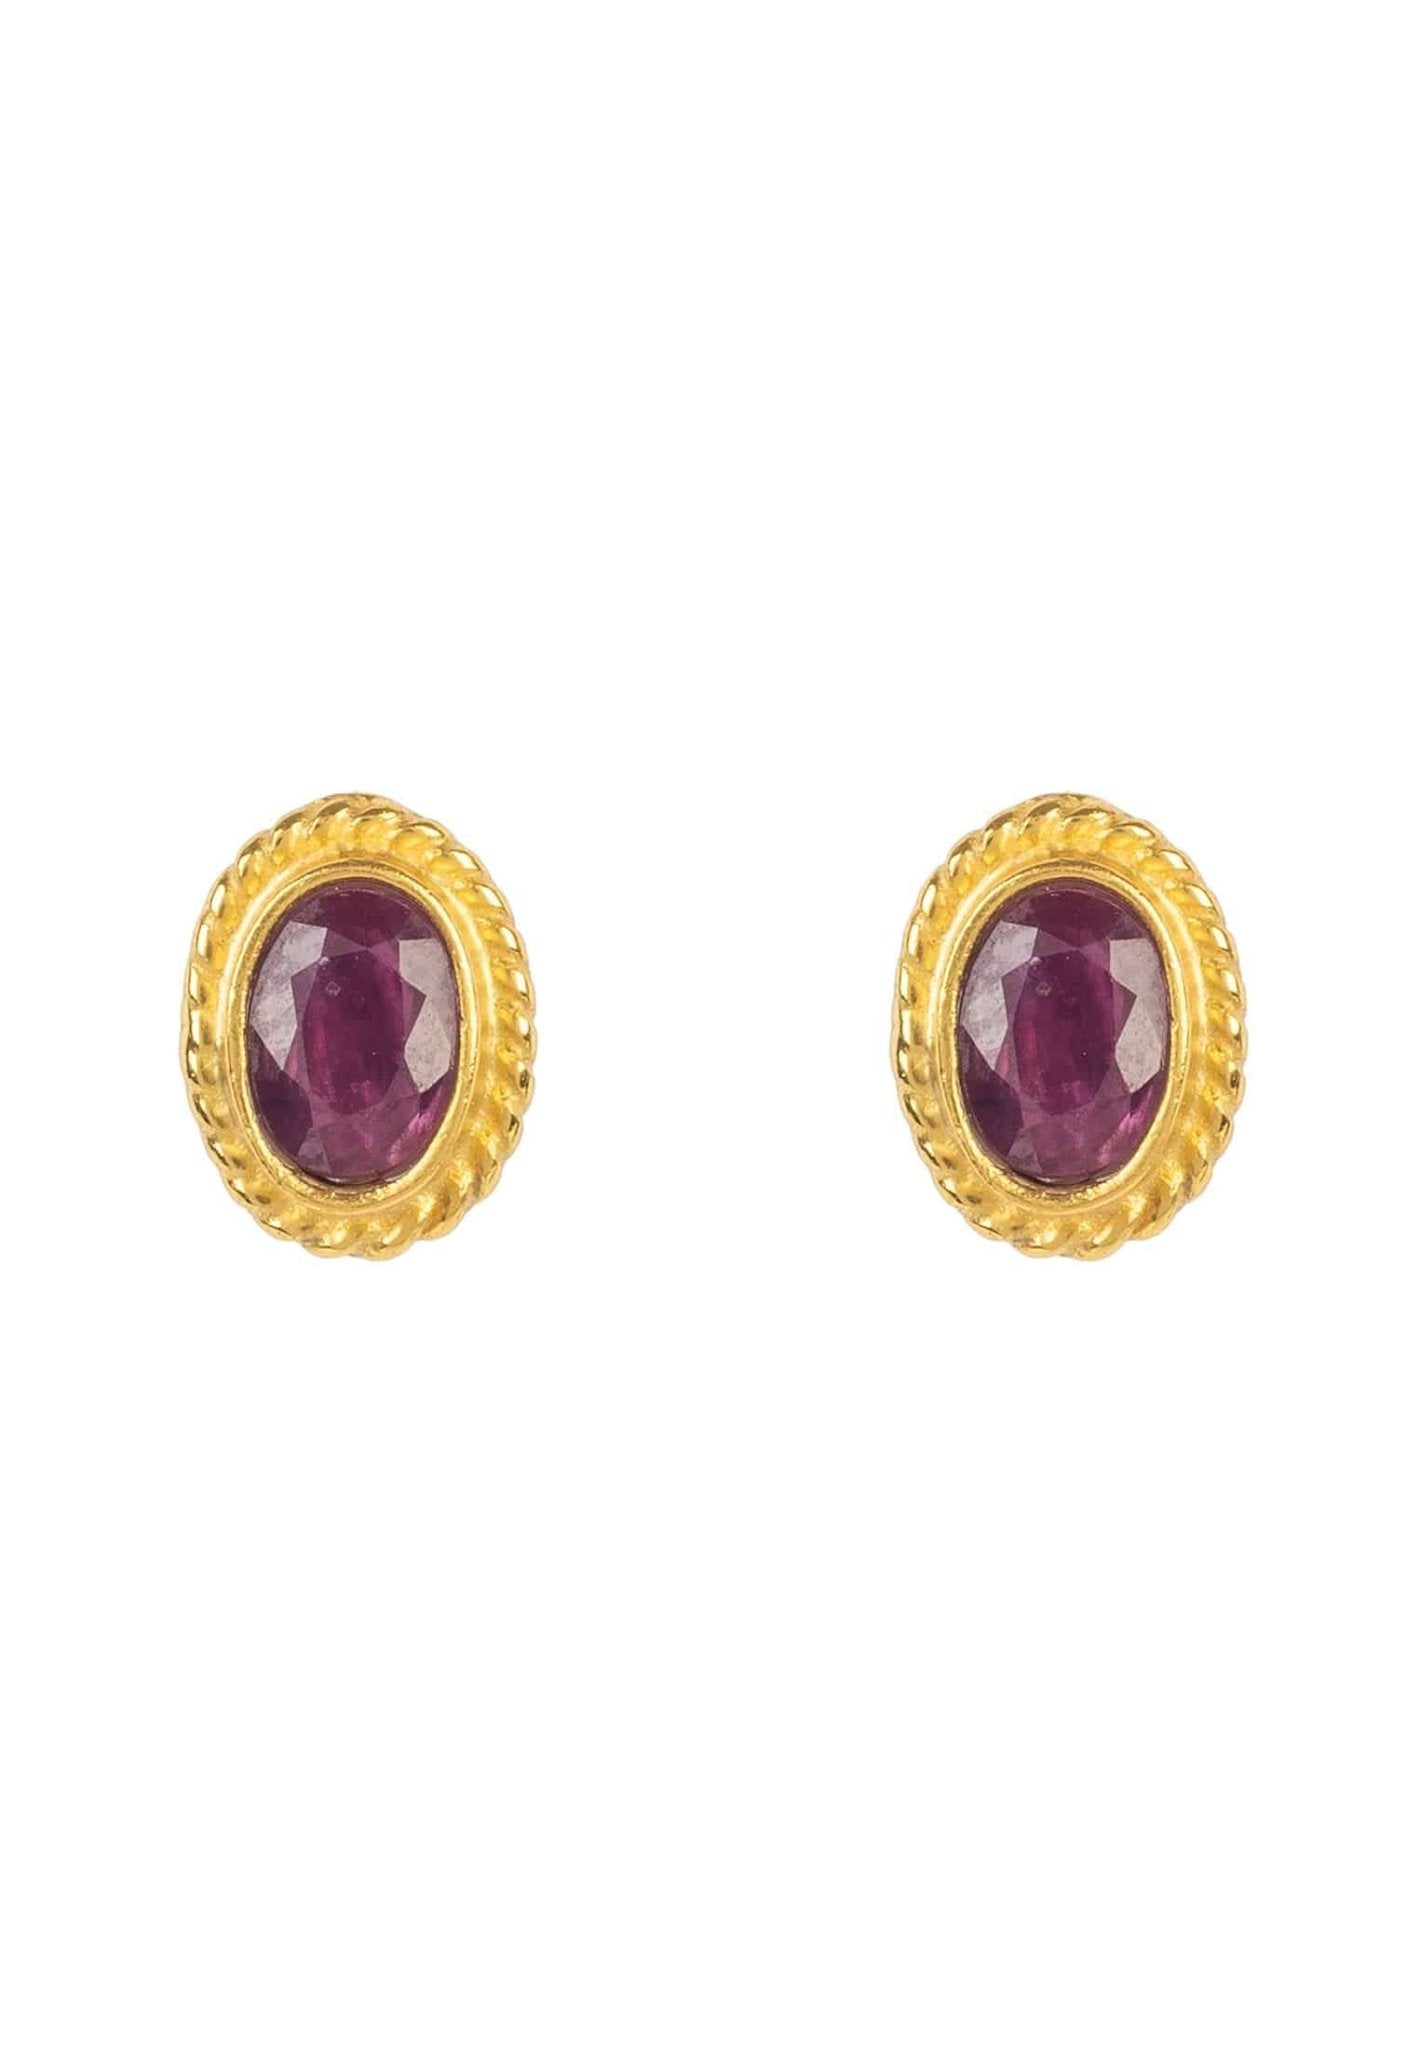 Birthstone Gold Gemstone Stud Earring July Ruby - LATELITA Earrings